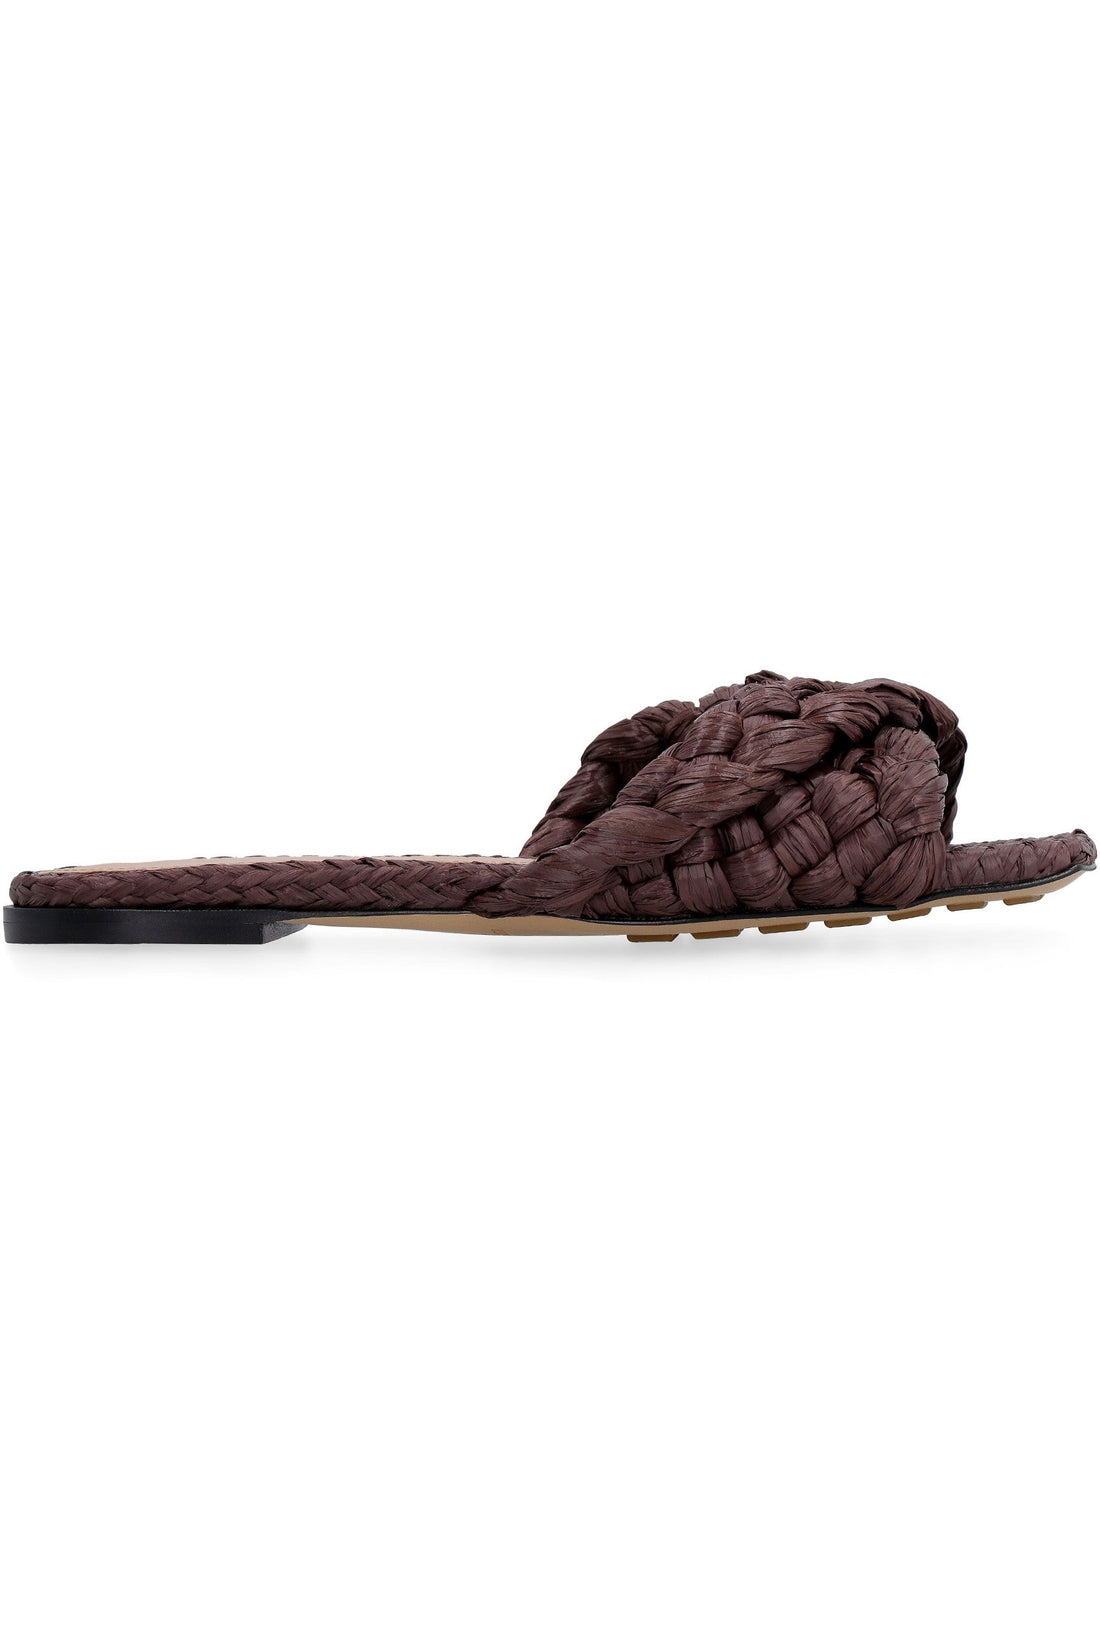 Bottega Veneta-OUTLET-SALE-Flat Stretch sandals-ARCHIVIST